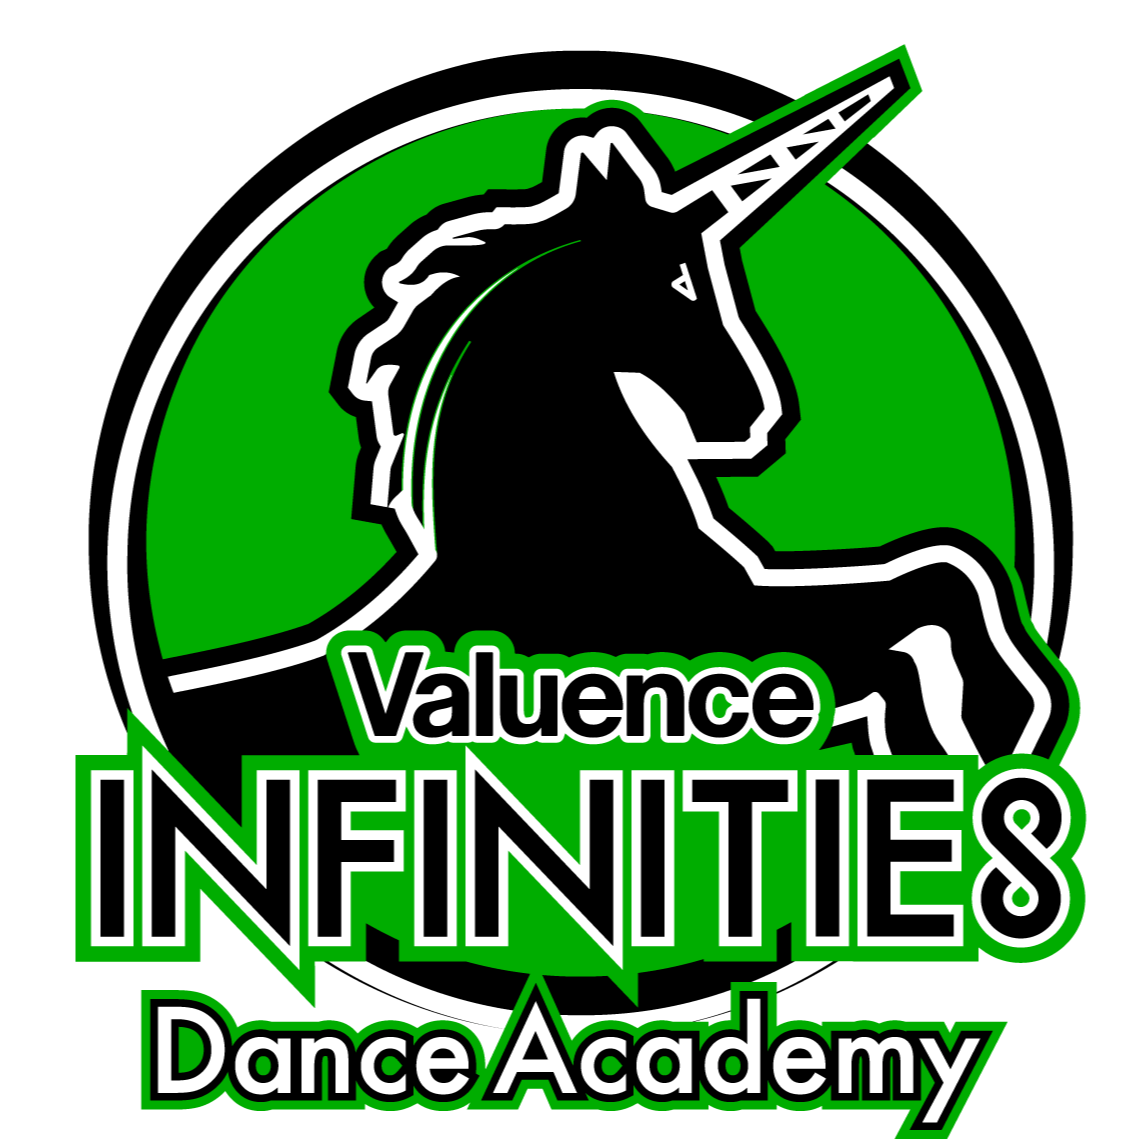 Valuence INFINITIES Dance Academy